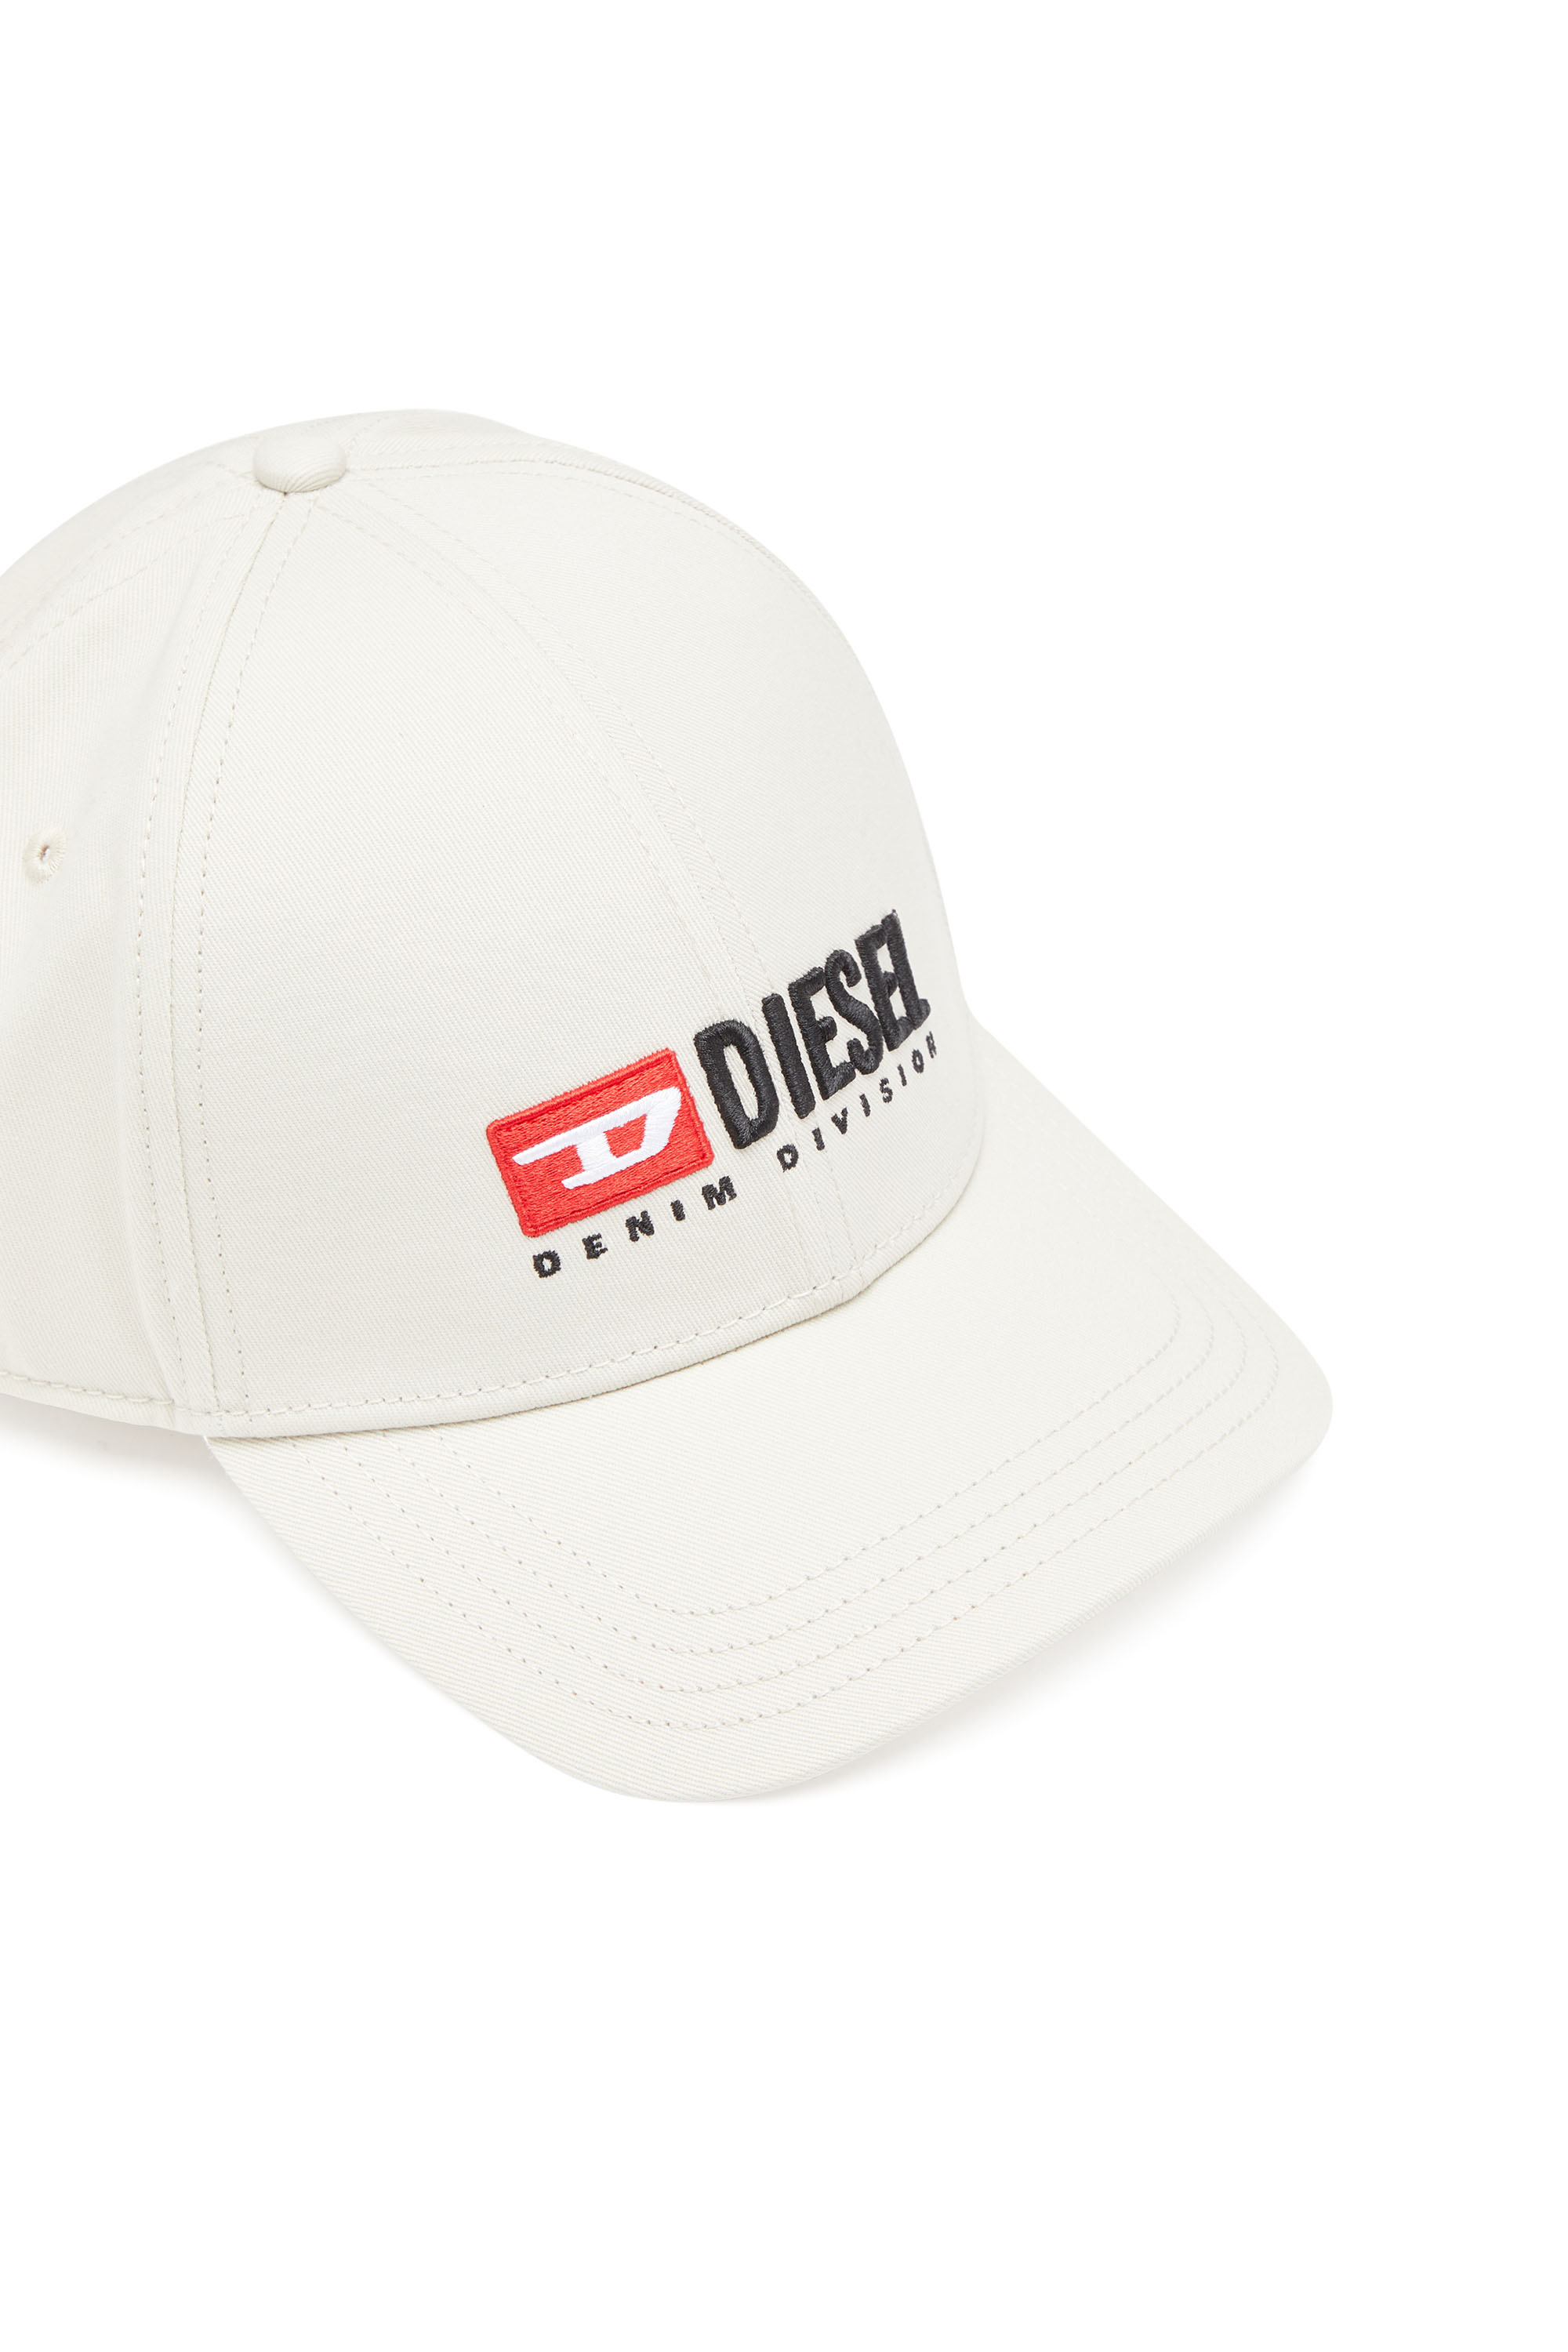 Diesel - CORRY-DIV, Unisex Baseball cap with Denim Division logo in White - Image 3